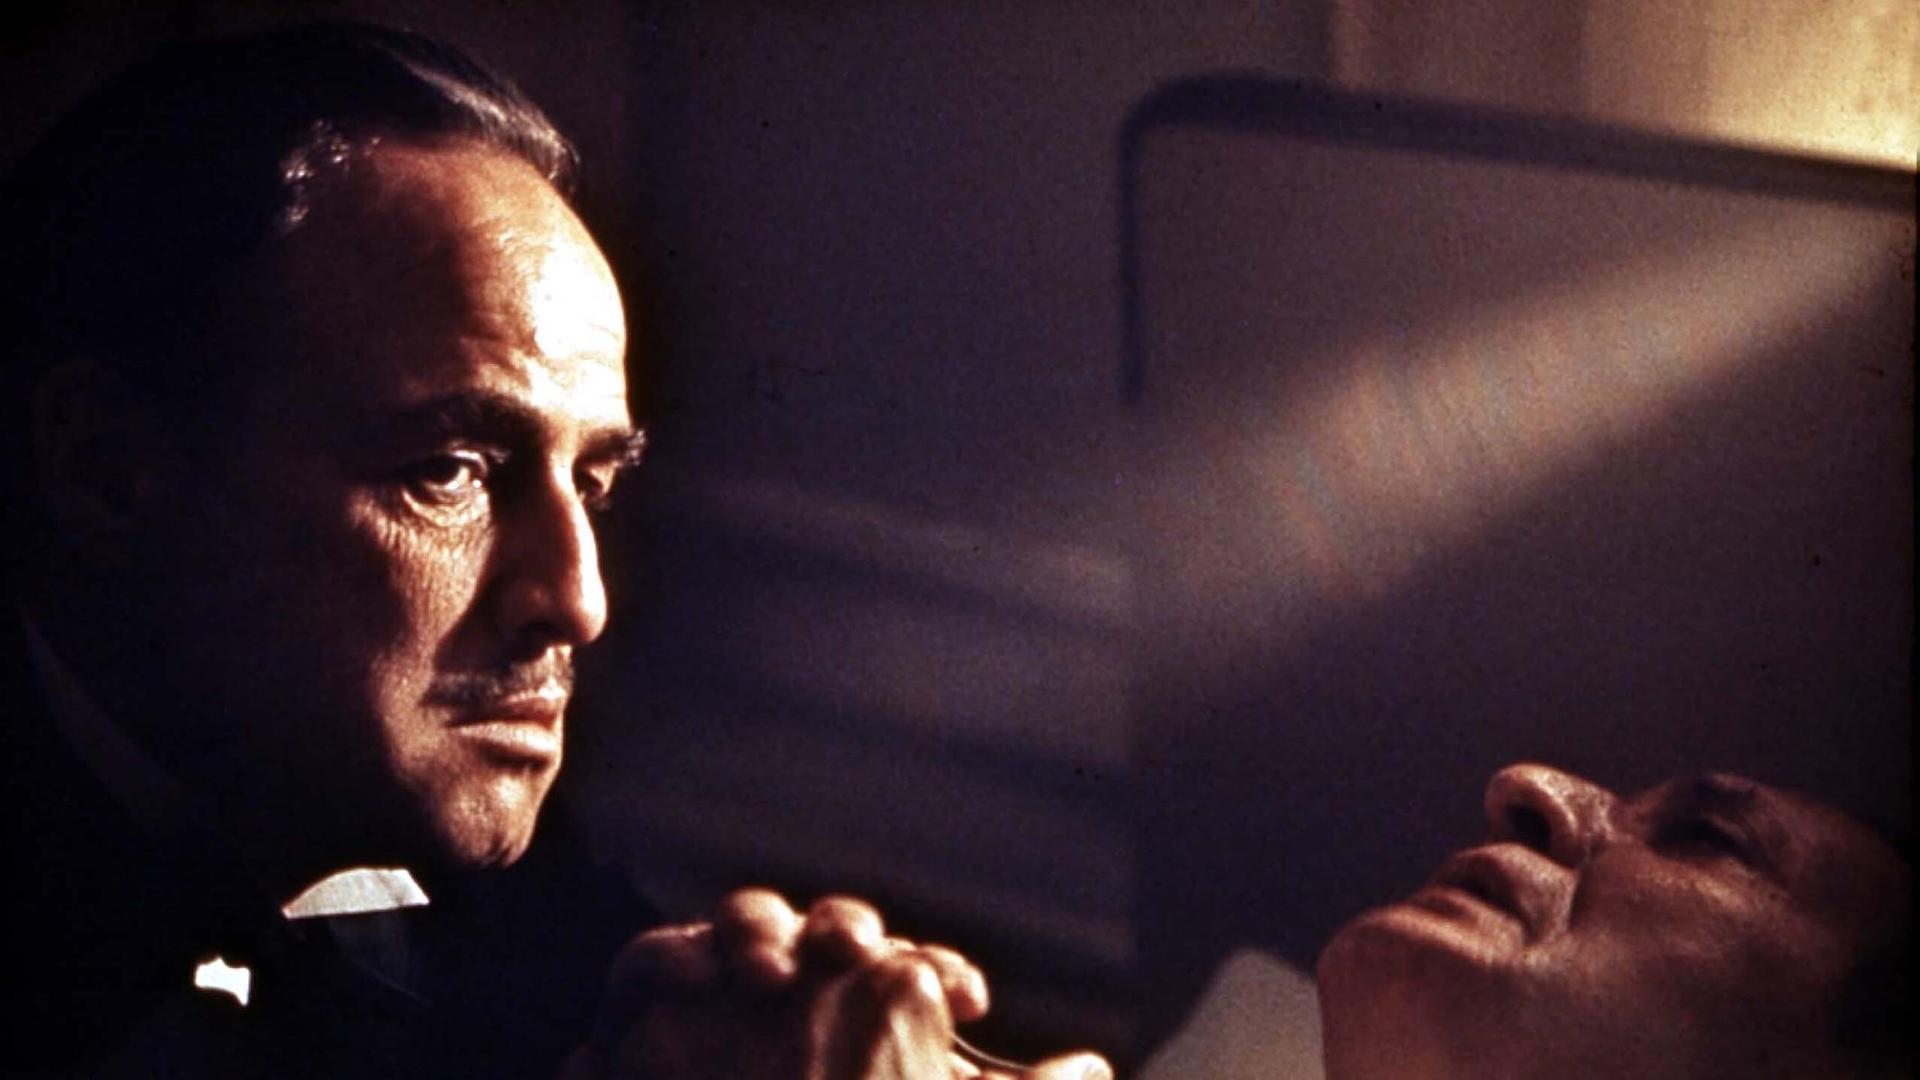 Marlon Brando als Vito Corleone im Mafiafilm "Der Pate" von Francis Ford Coppola aus dem Jahr 1972